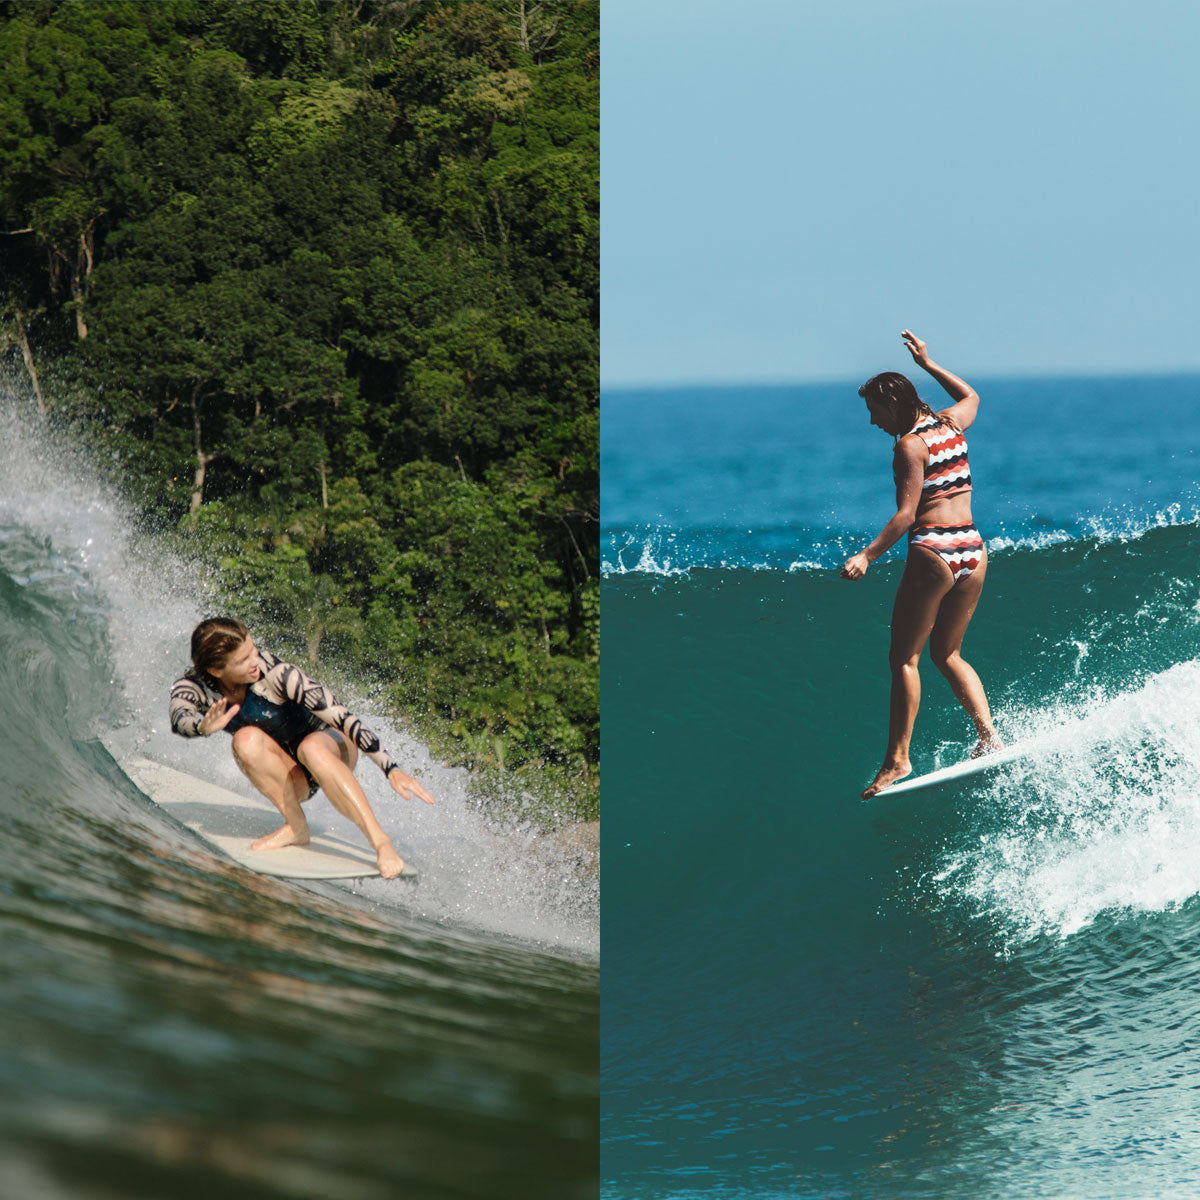 Leah Dawson and Karina Rozunko nominated for the 2018 Surfer Awards